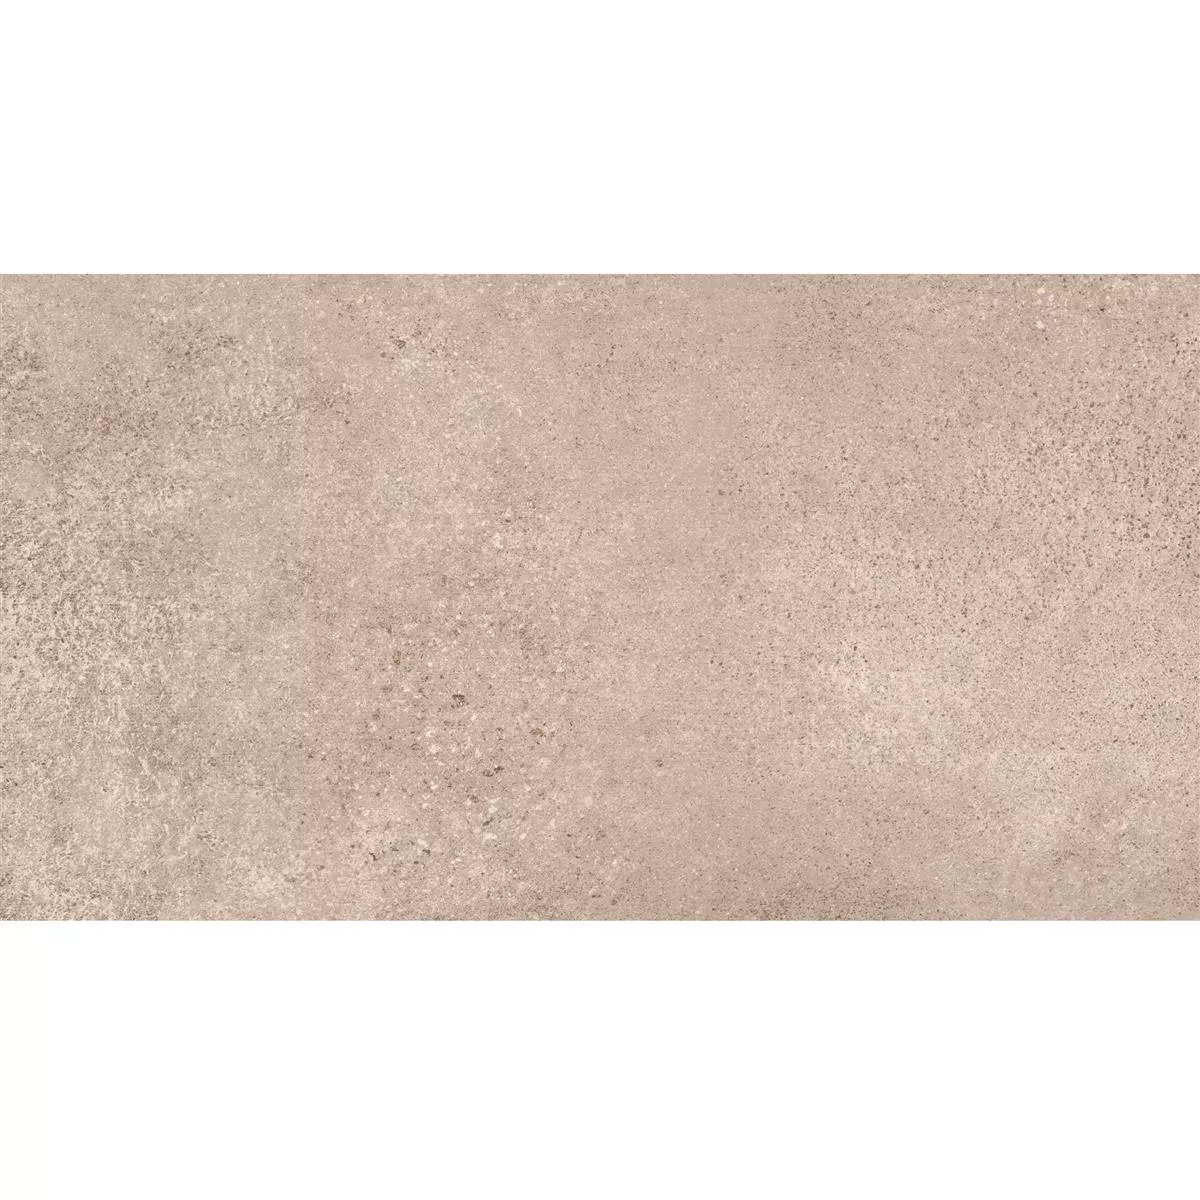 Ladrilhos Olhar de Pedra Riad Fosco R9 Marrom Claro 30x60cm 